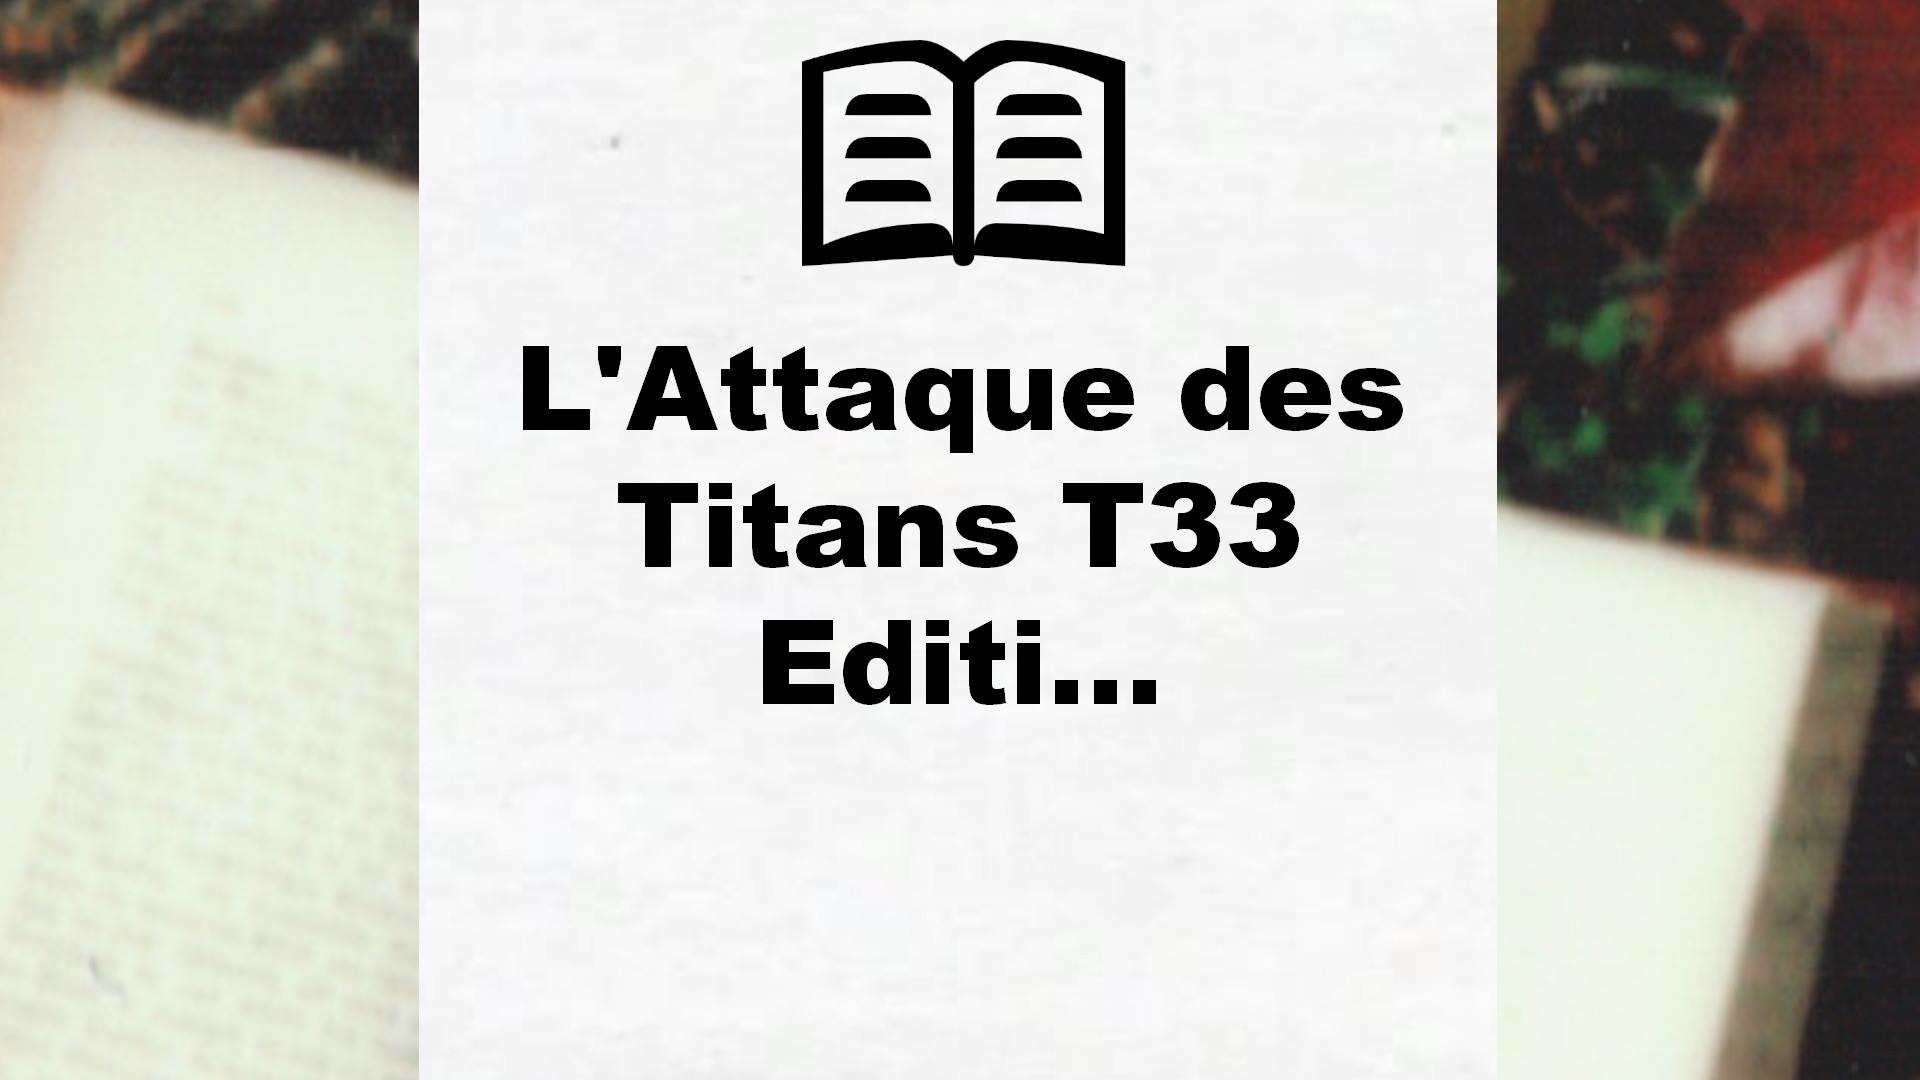 L’Attaque des Titans T33 Editi… – Critique